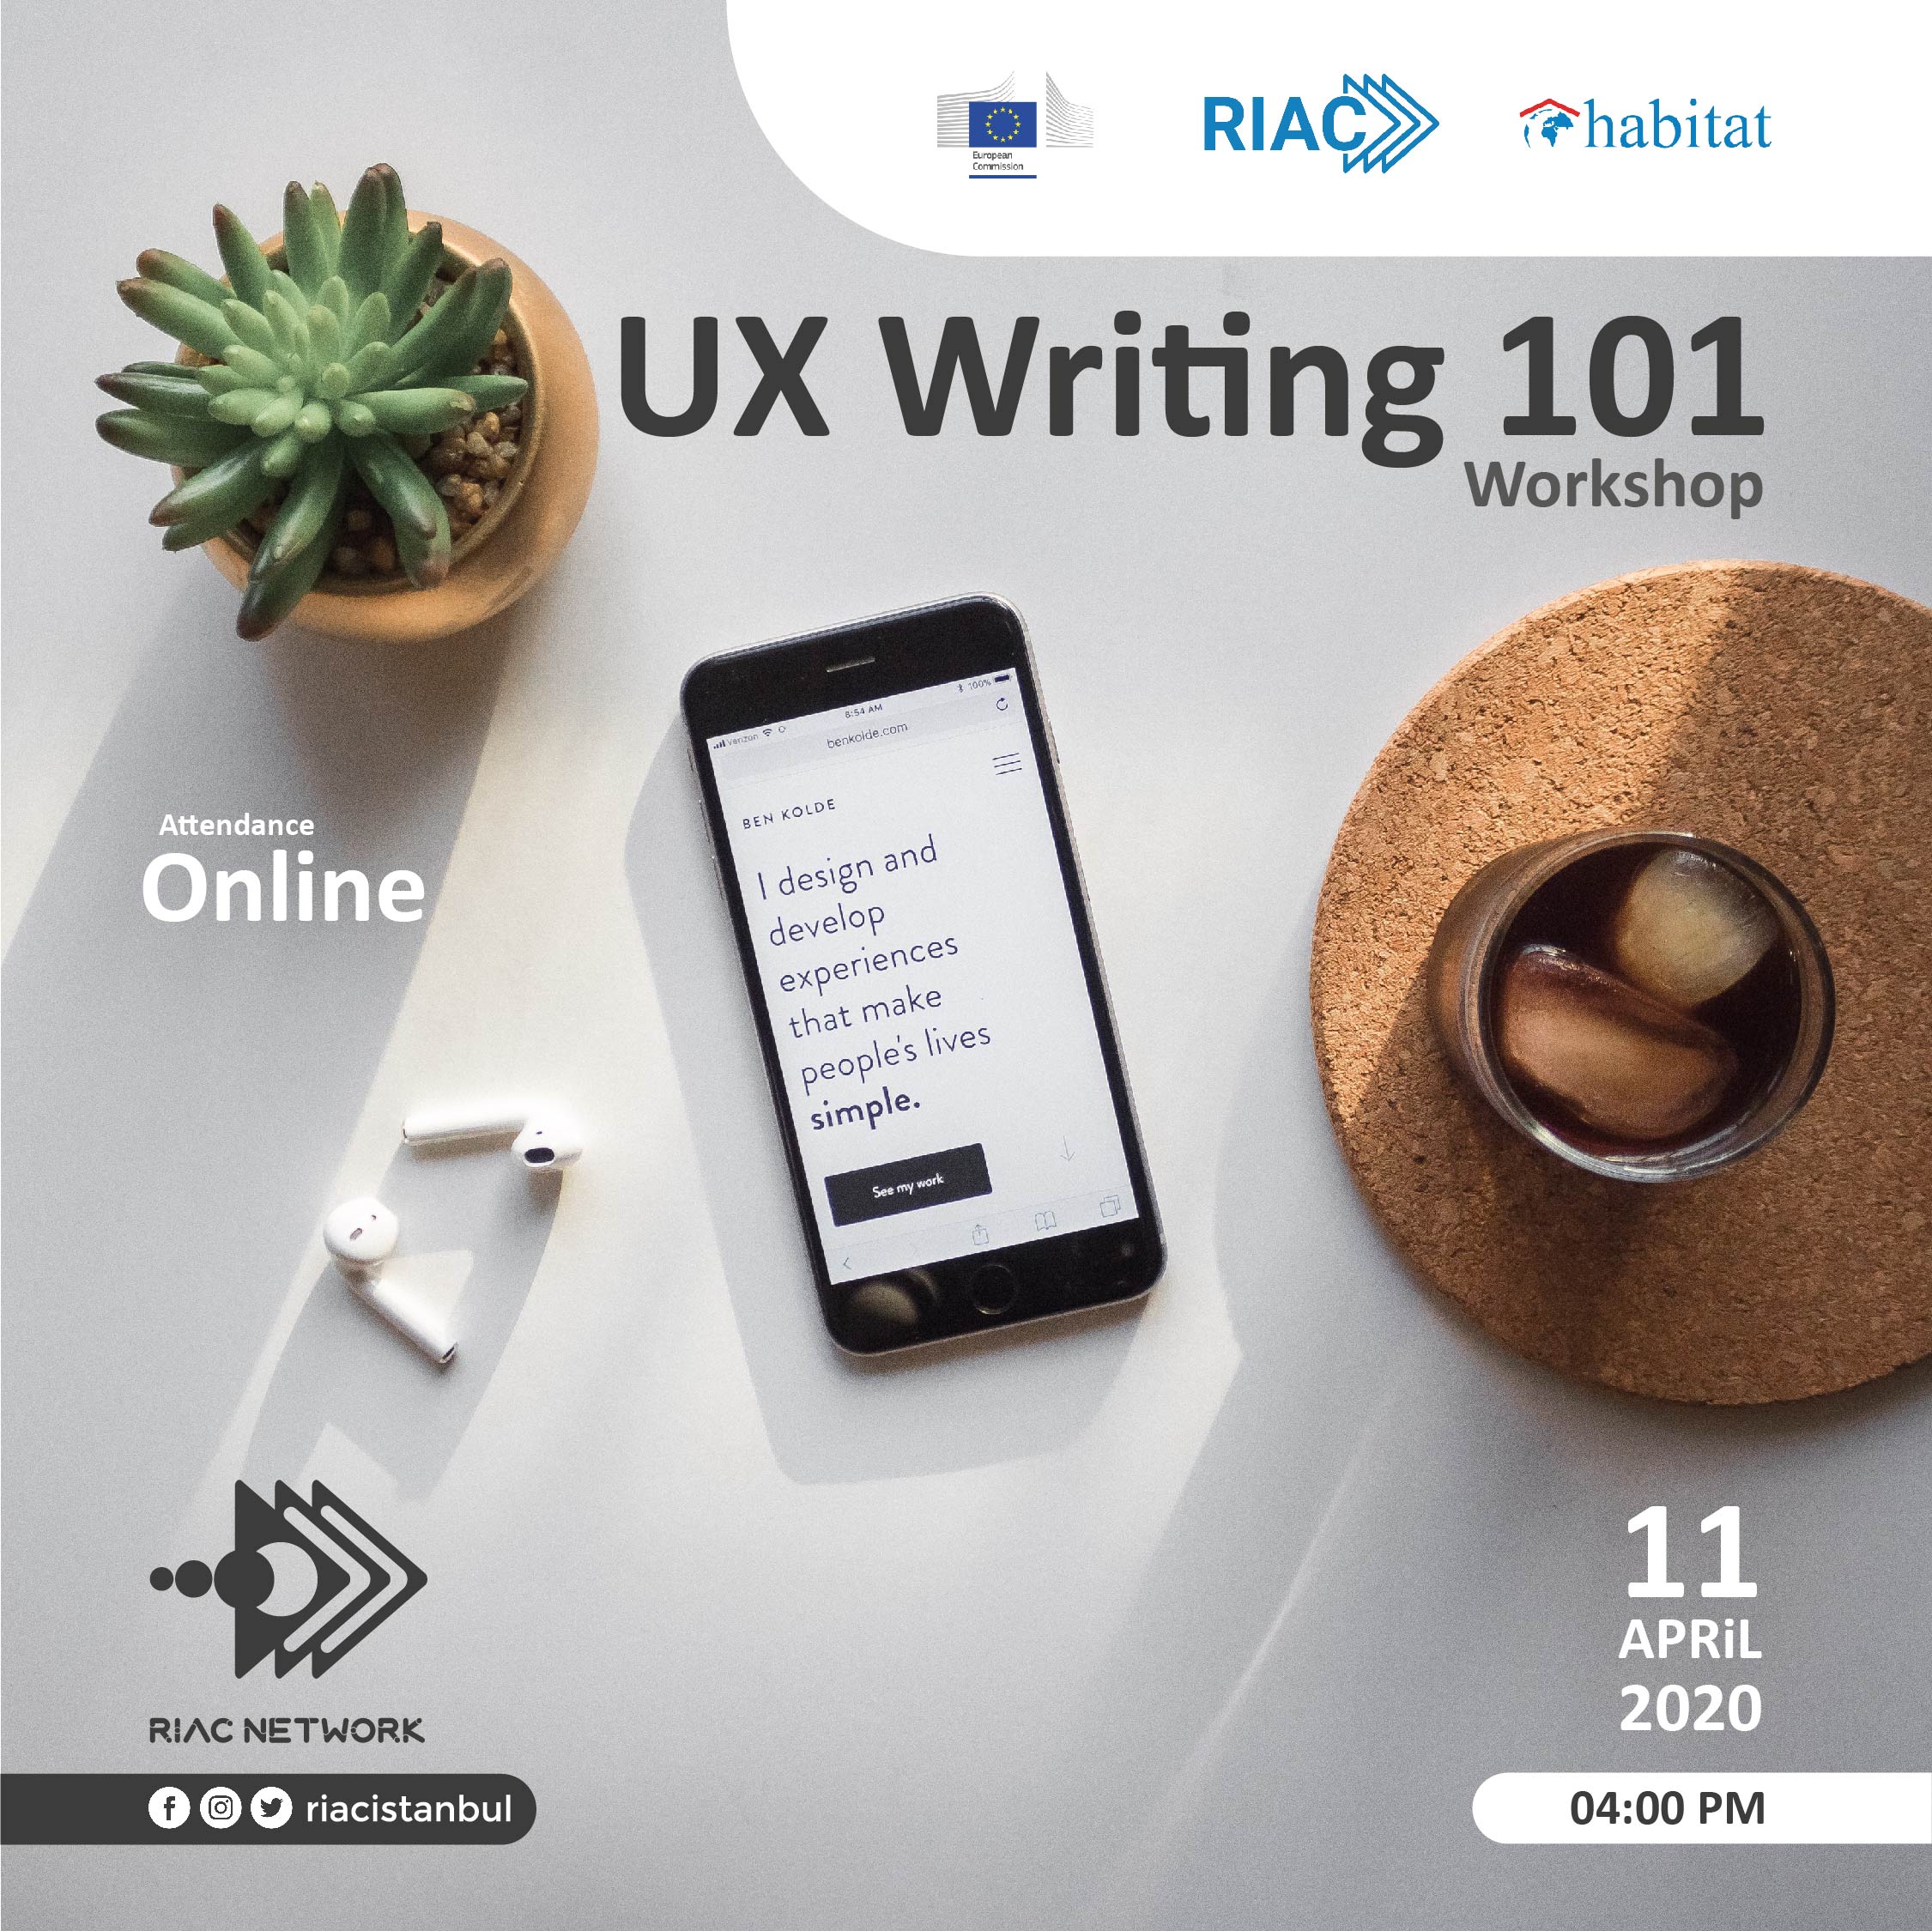 UX Writing 101 Workshop